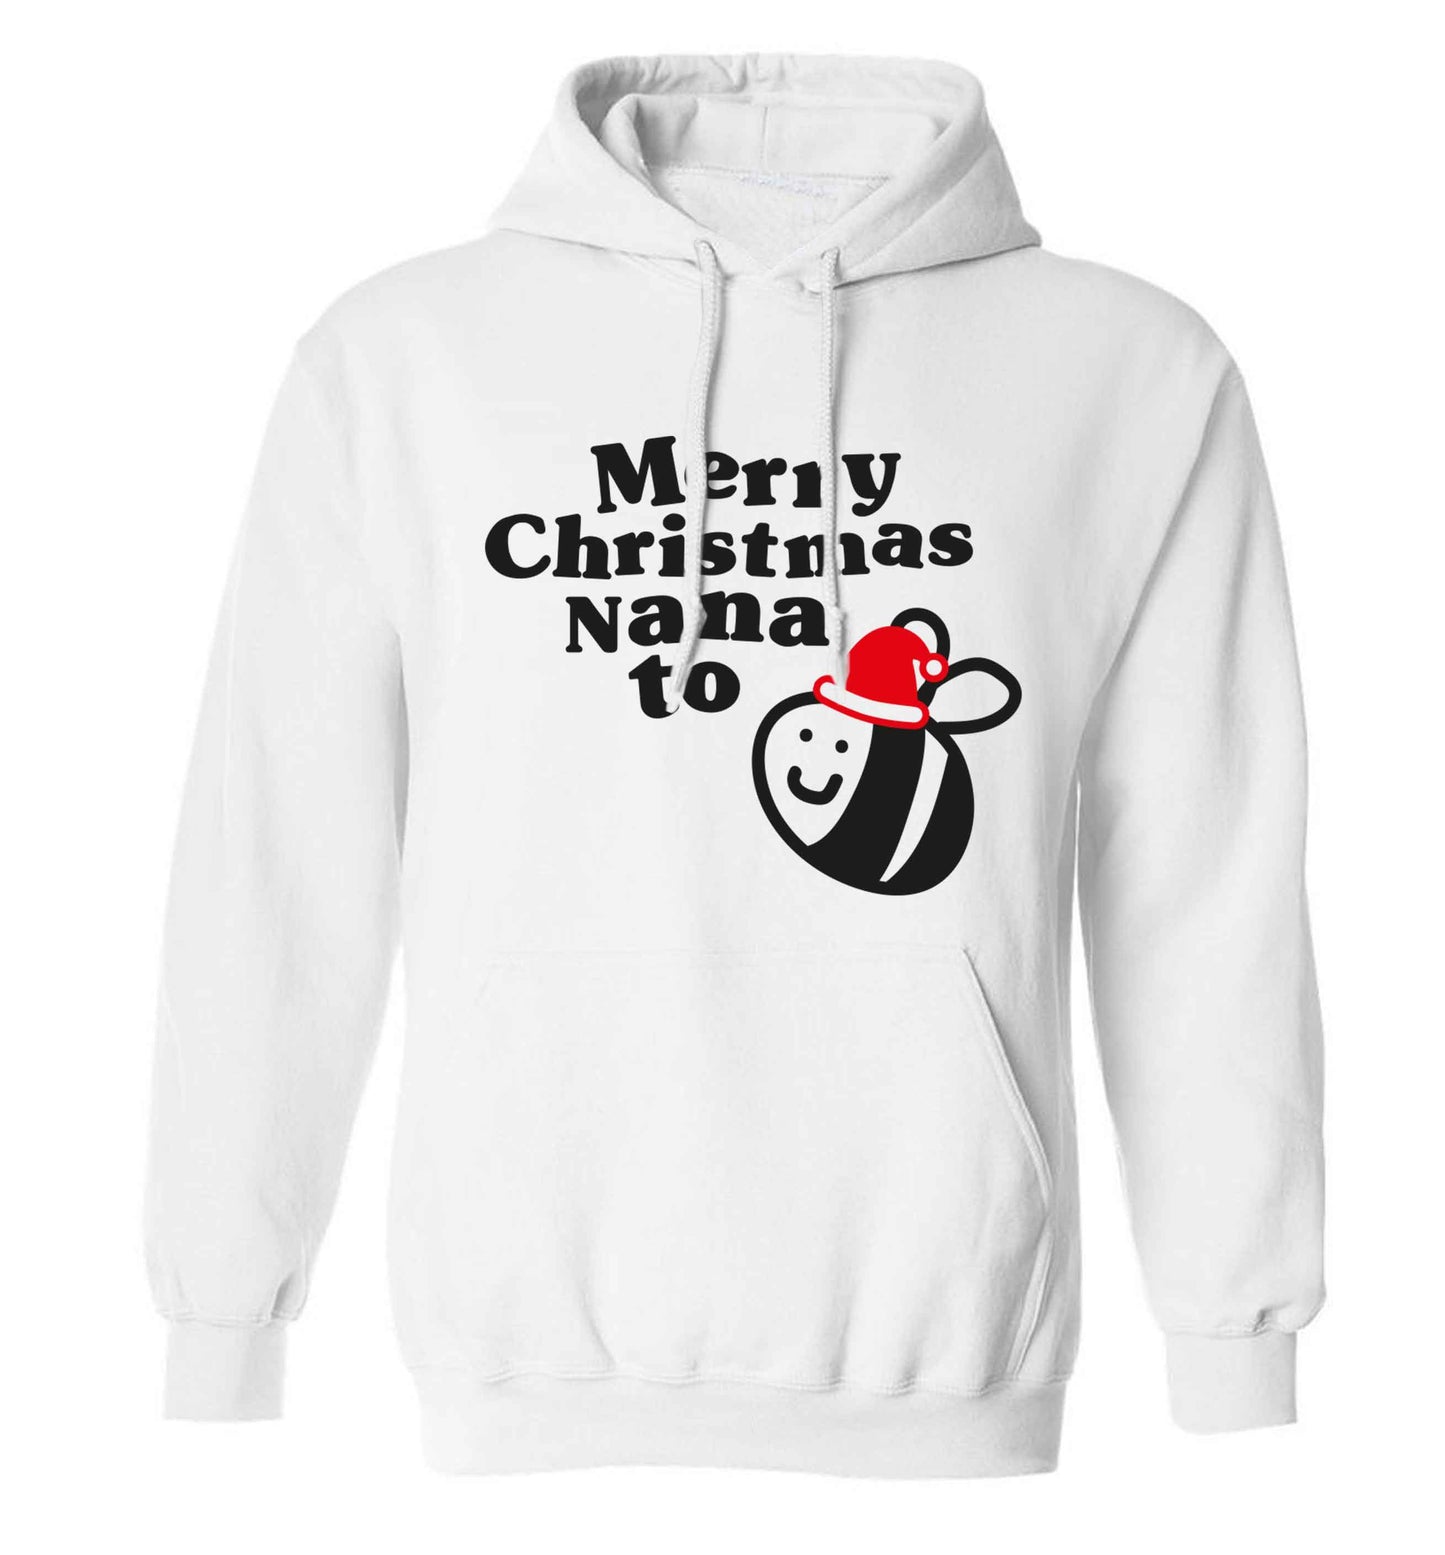 Merry Christmas nana to be adults unisex white hoodie 2XL